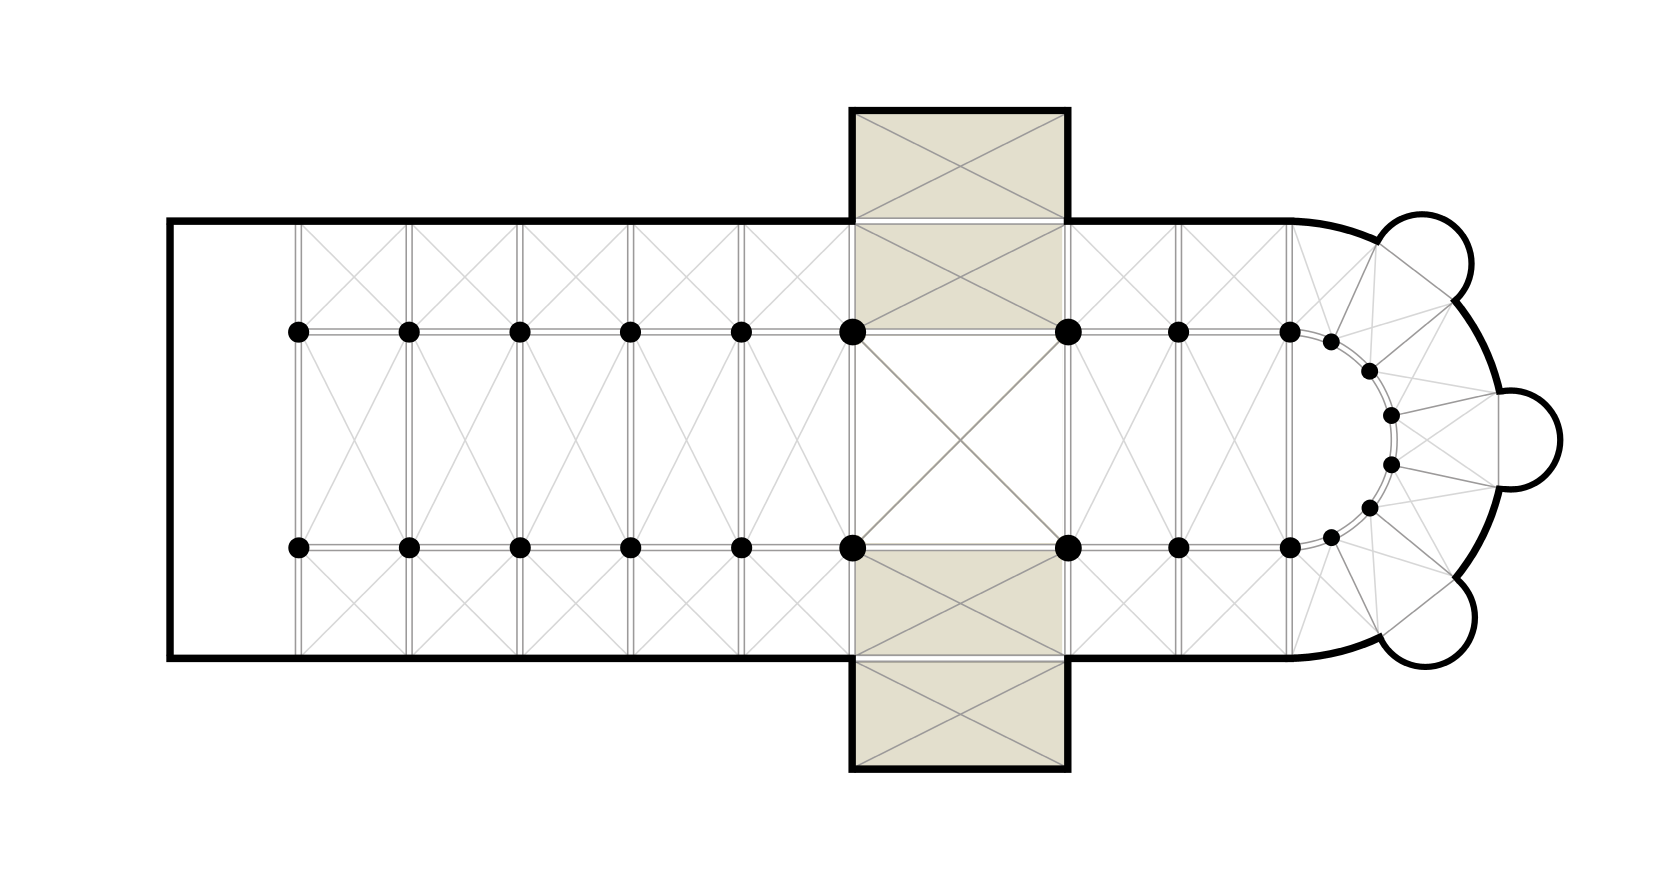 A basilica plan. Source: https://en.wikipedia.org/wiki/Basilica